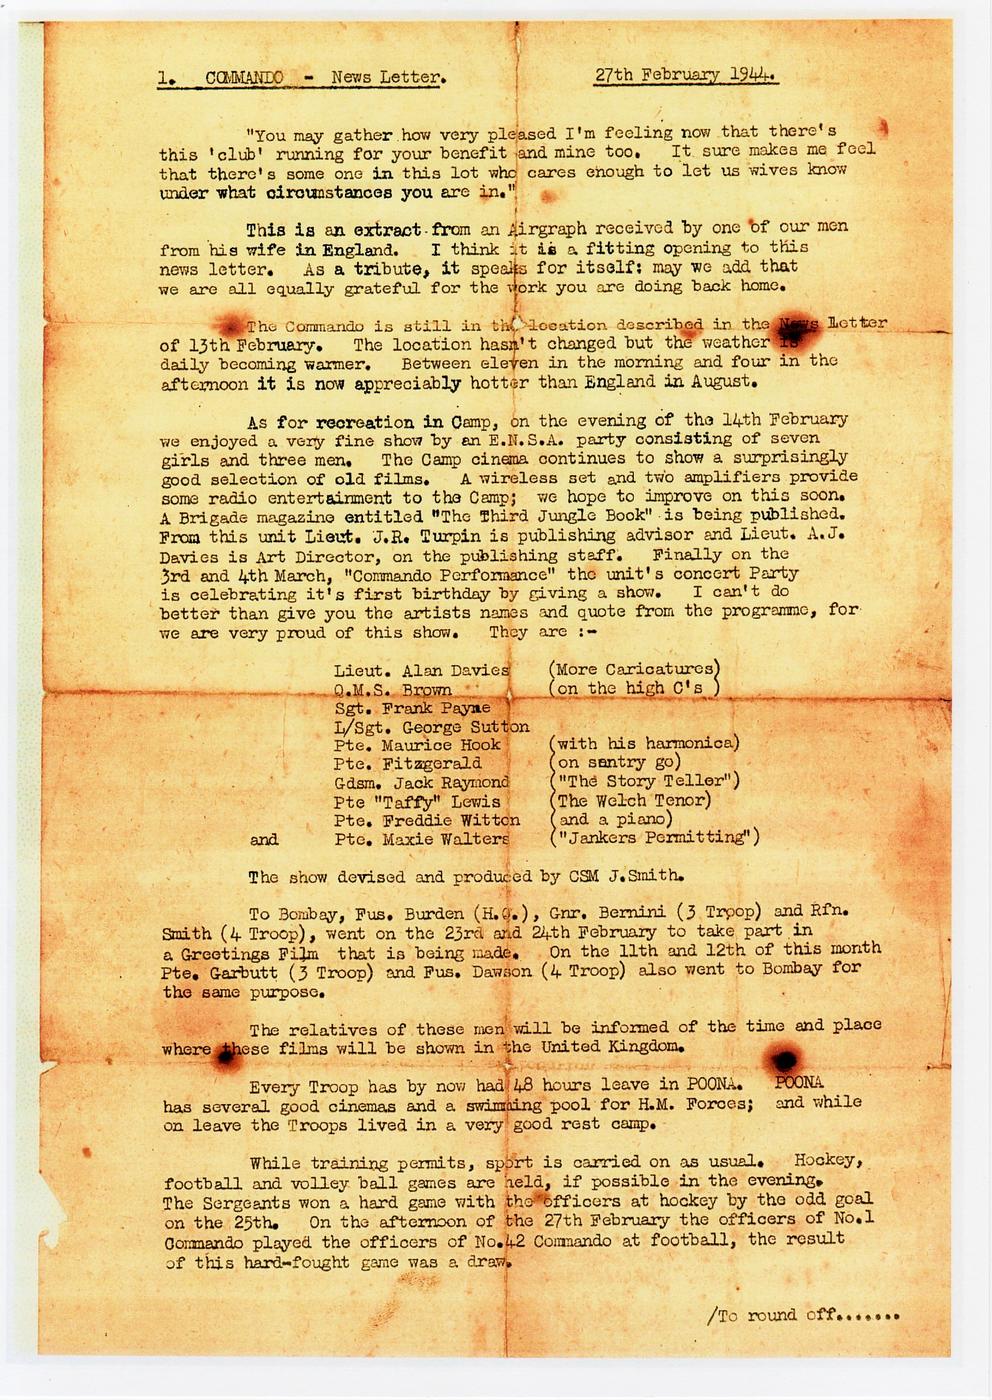 No1 Commando News Letter 27 Feb 1944-page 1-owner Teresa Fitzgerald.